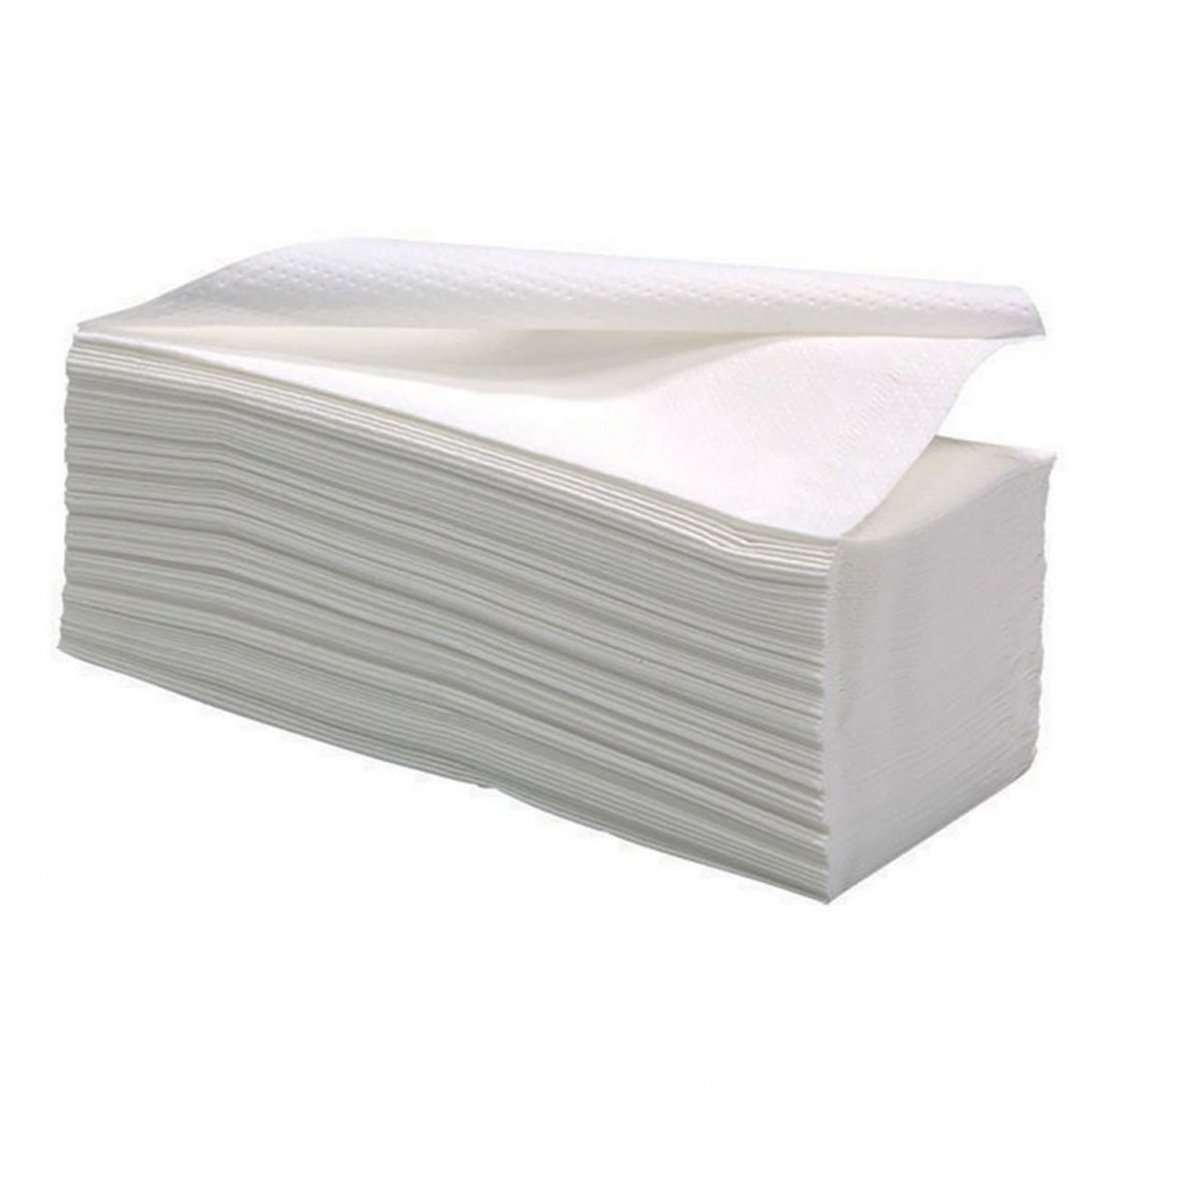 5 Pacotes Papel Toalha Interfolhado 20 X 21 Cm Pacote 1000 Folhas Bioclean Paper Luxo Branco - Kit 5 - 5